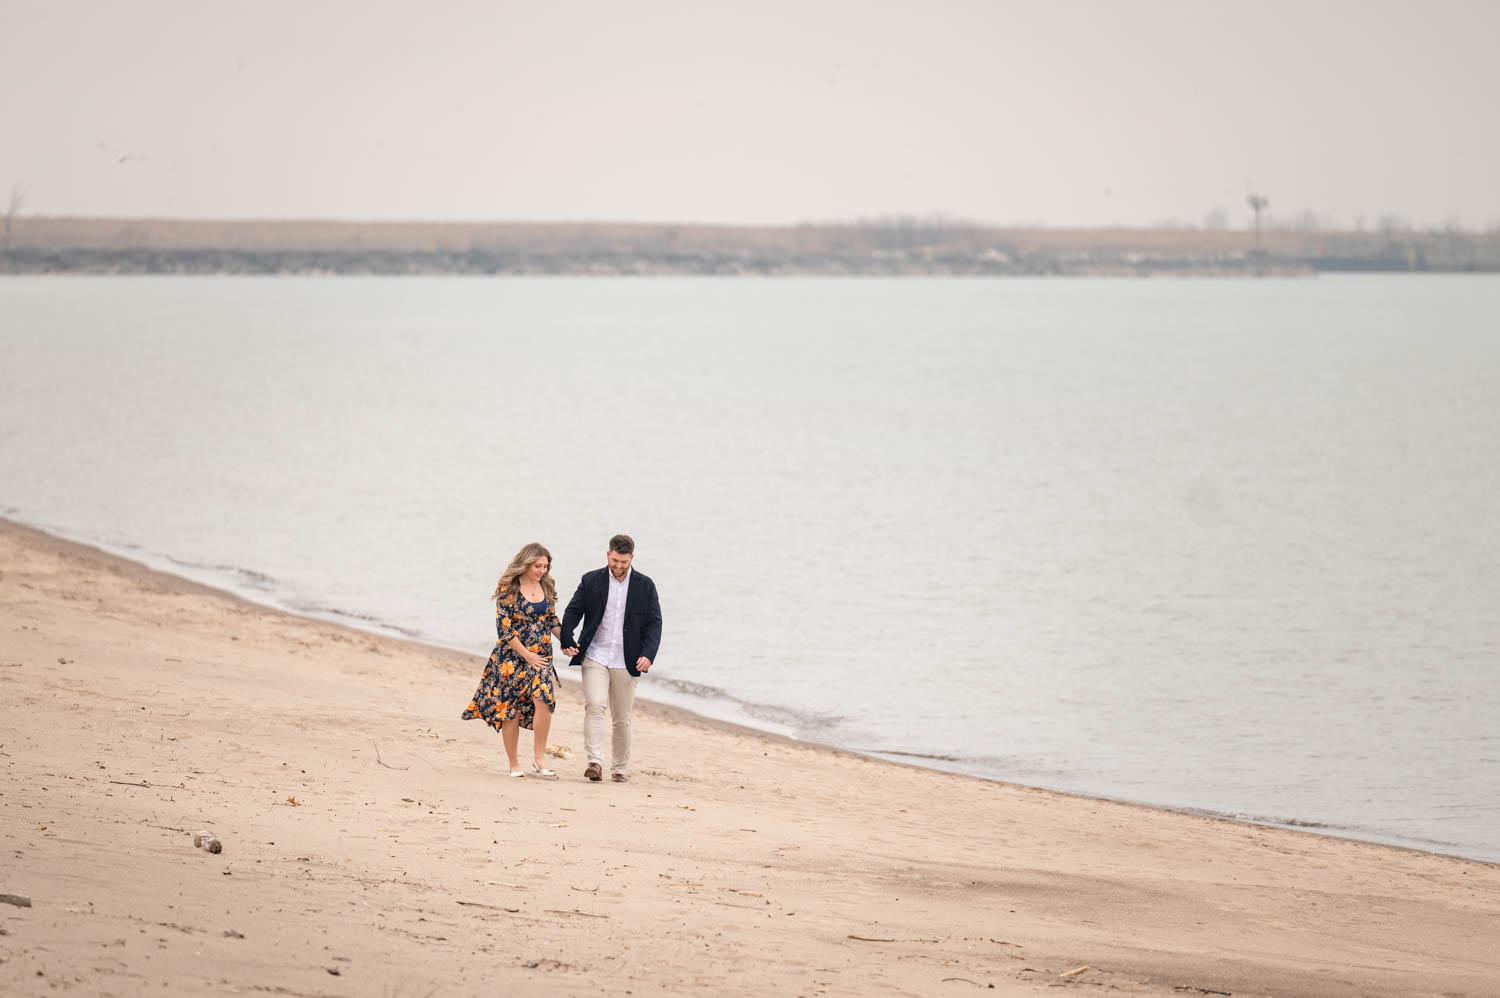 Couple walking down the beach